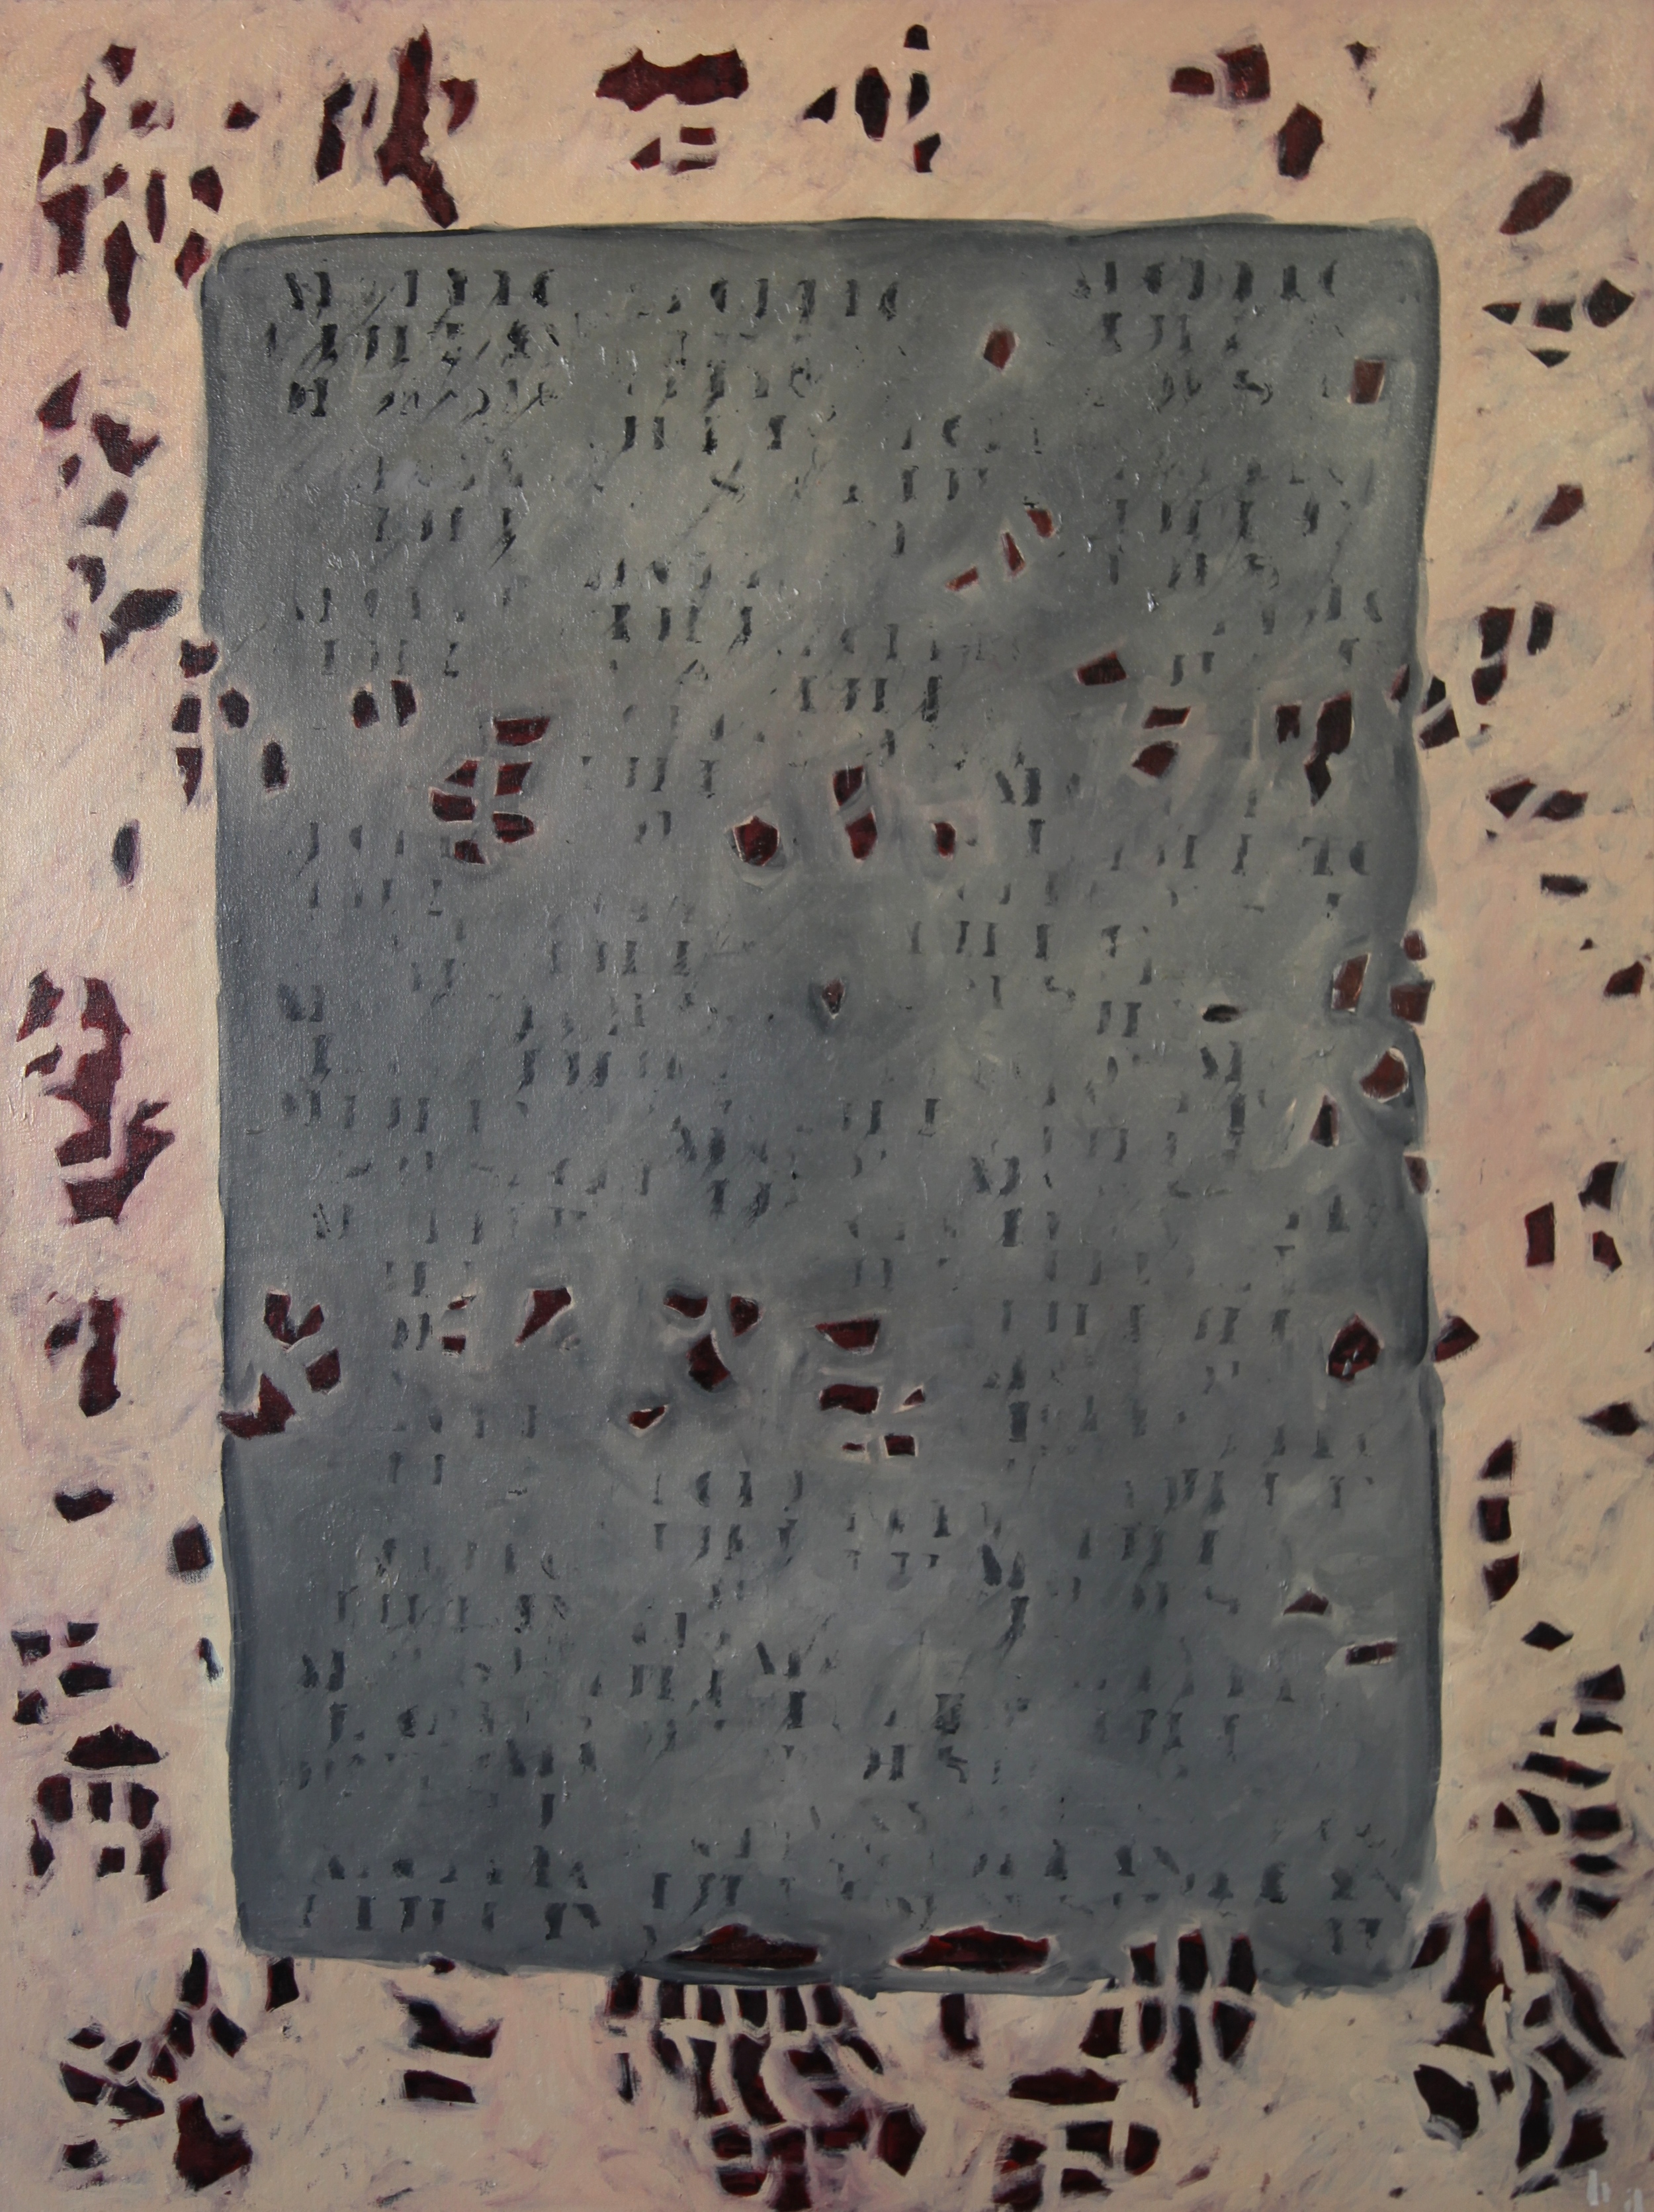   Navajo   oil on canvas  48" x 36"&nbsp;  1996  $3,600 